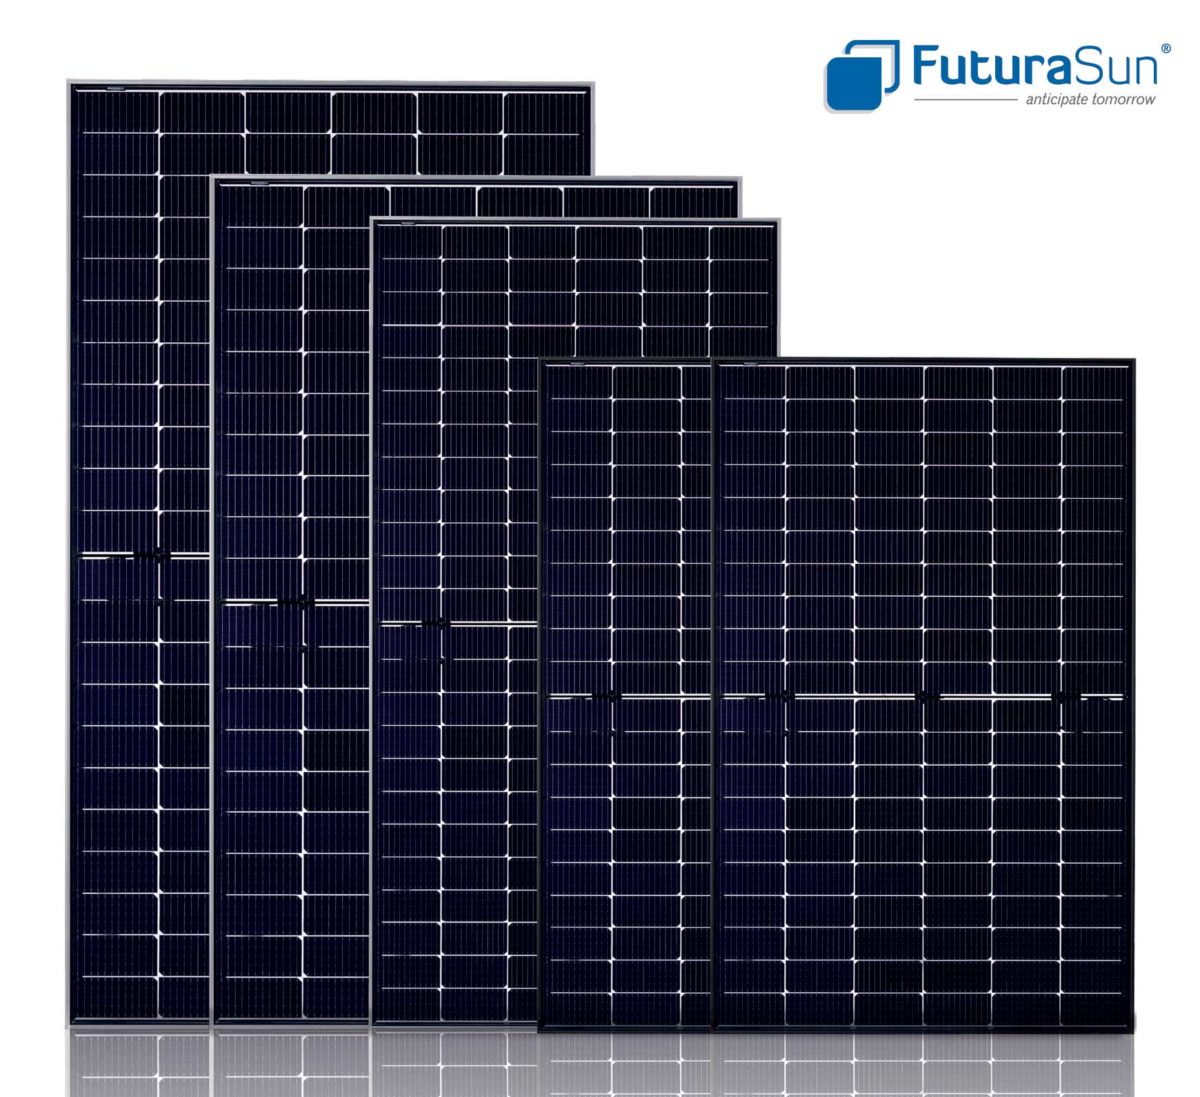 FuturaSun unveils n-type heterojunction solar modules